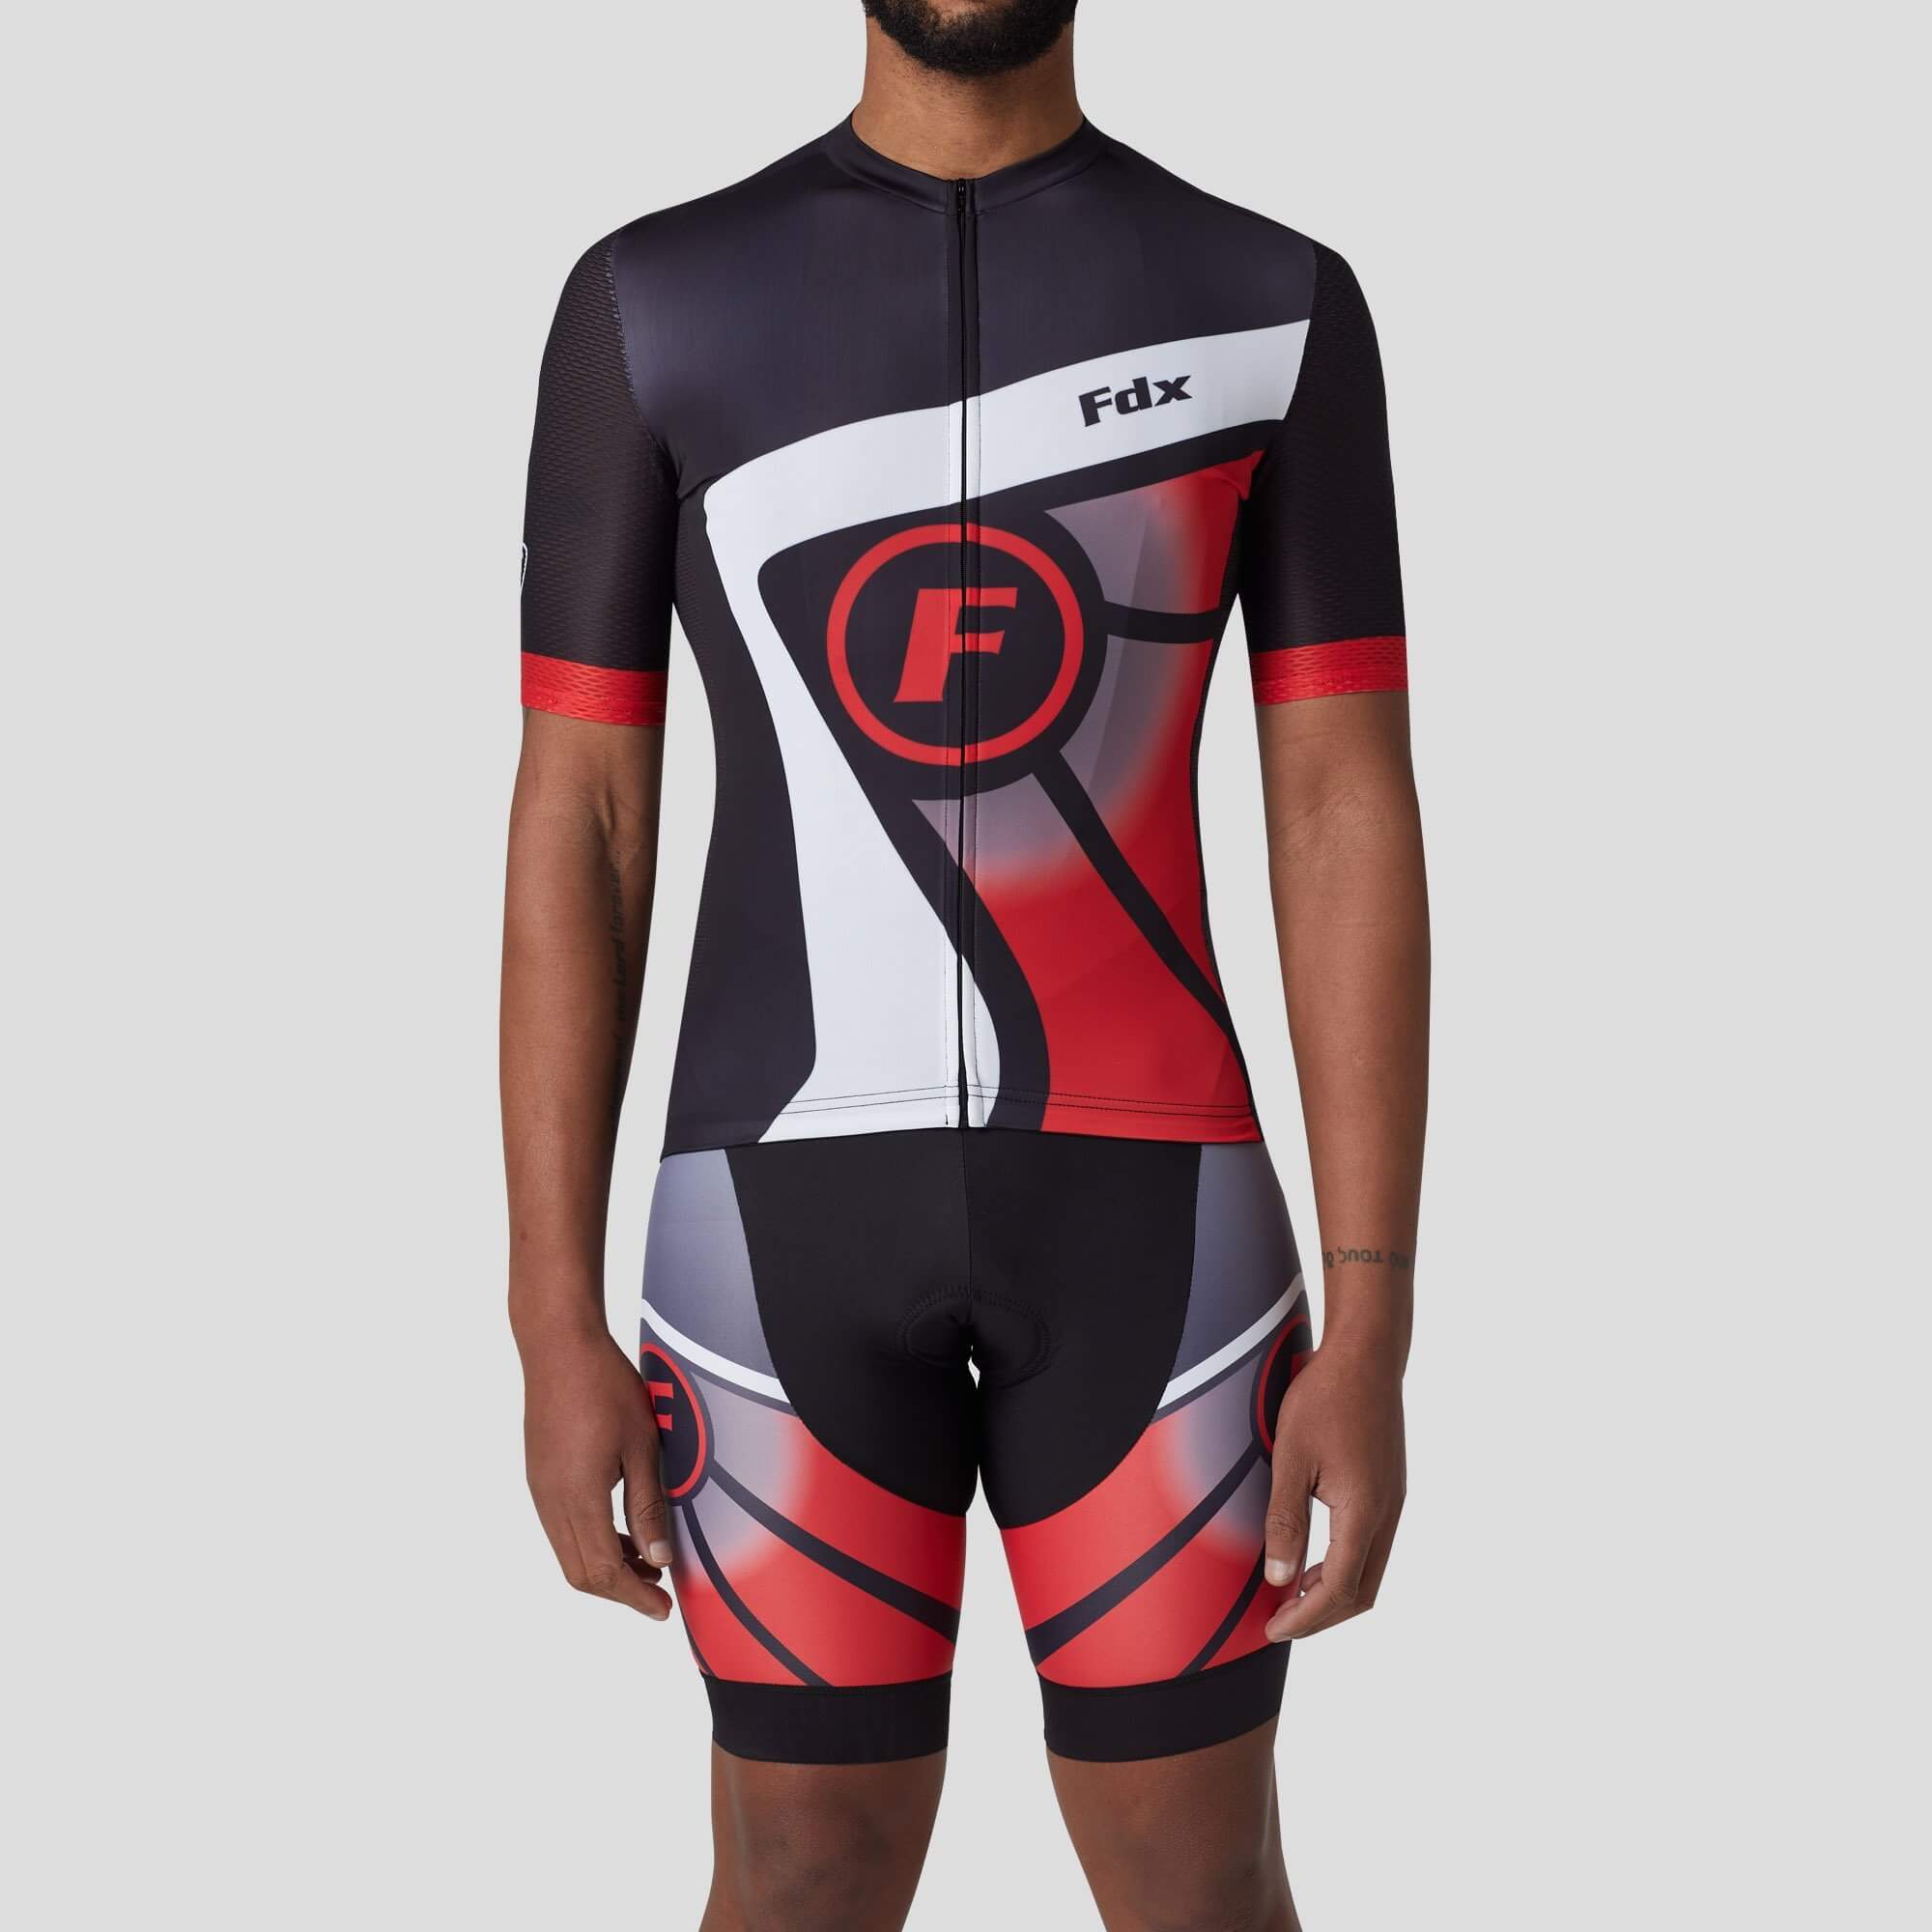 Fdx Mens Black & Red Short Sleeve Cycling Jersey & Gel Padded Bib Shorts Best Summer Road Bike Wear Light Weight, Hi-viz Reflectors & Pockets - Signature